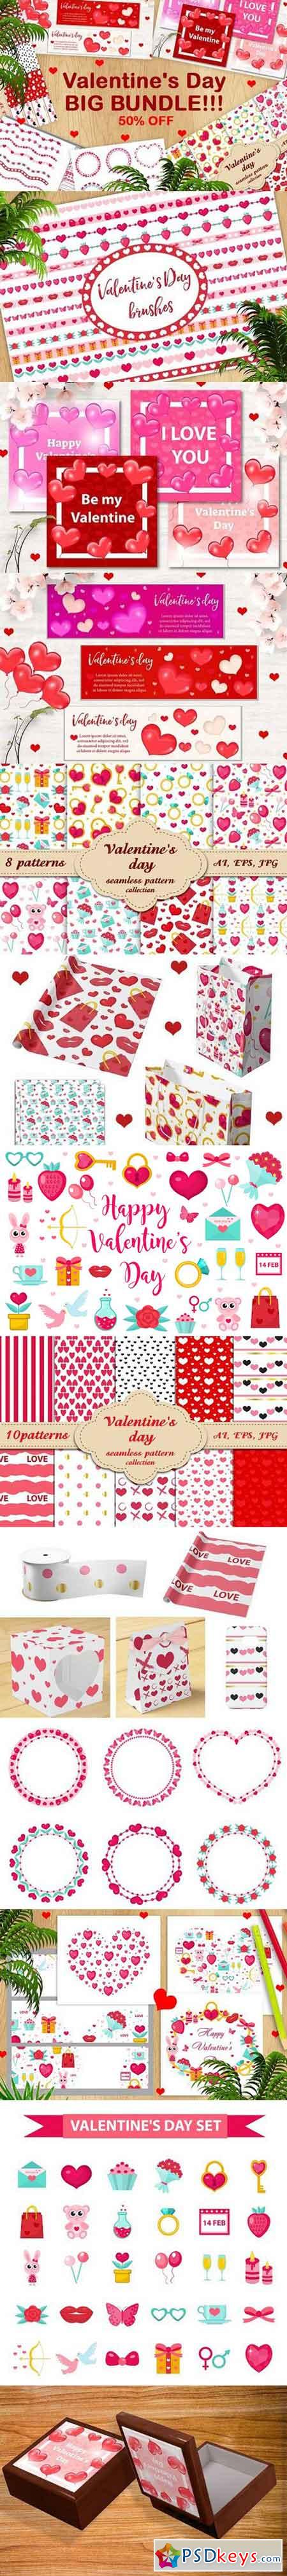 Valentine's Day BIG BUNDLE!!! 1225574